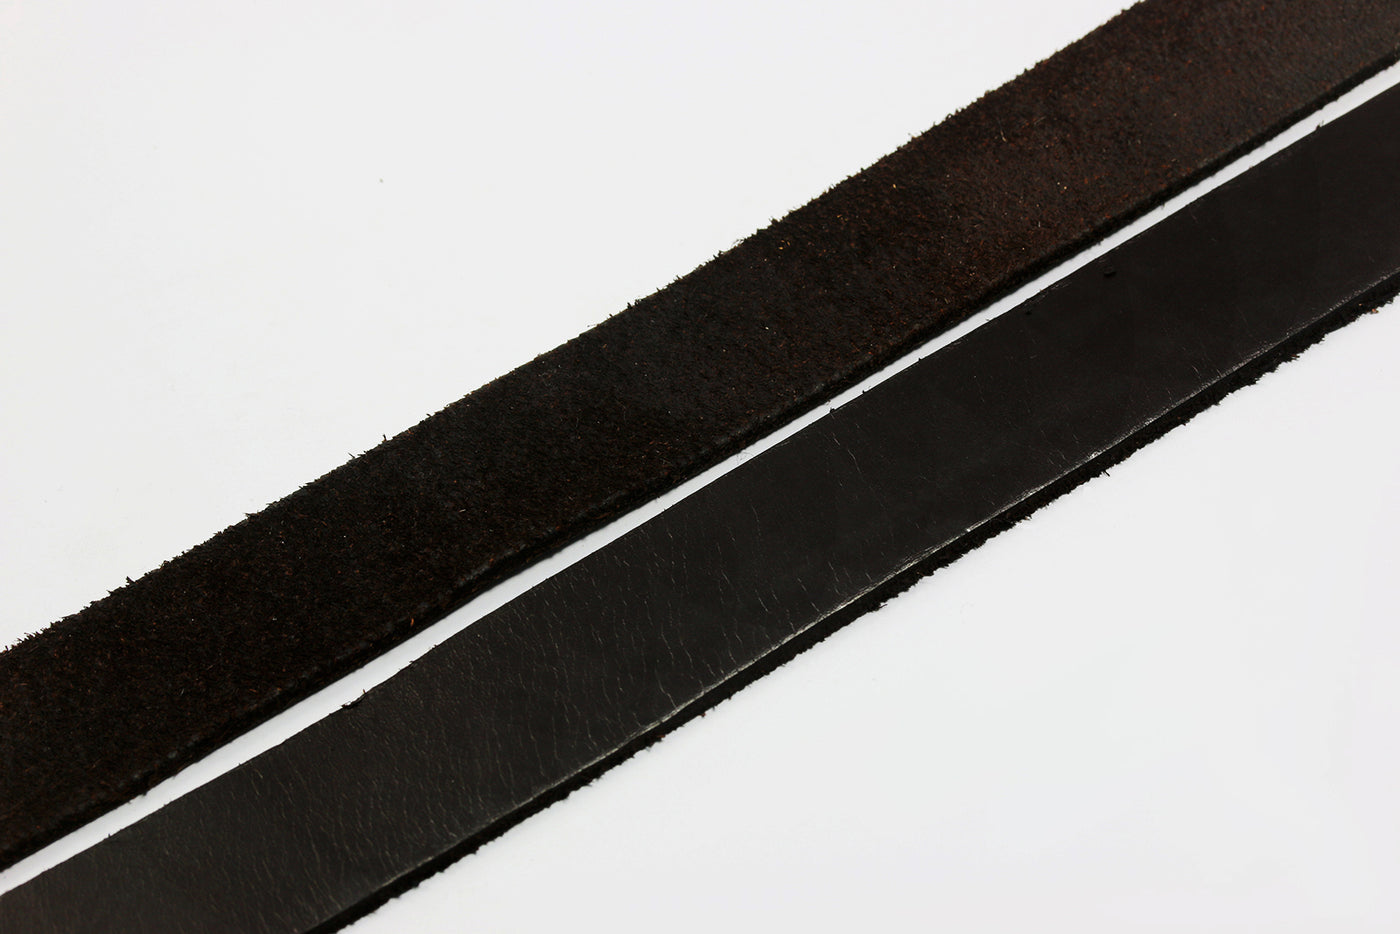 Lederband flach, 20 mm, 1 m, dunkelbraun, Echt Leder